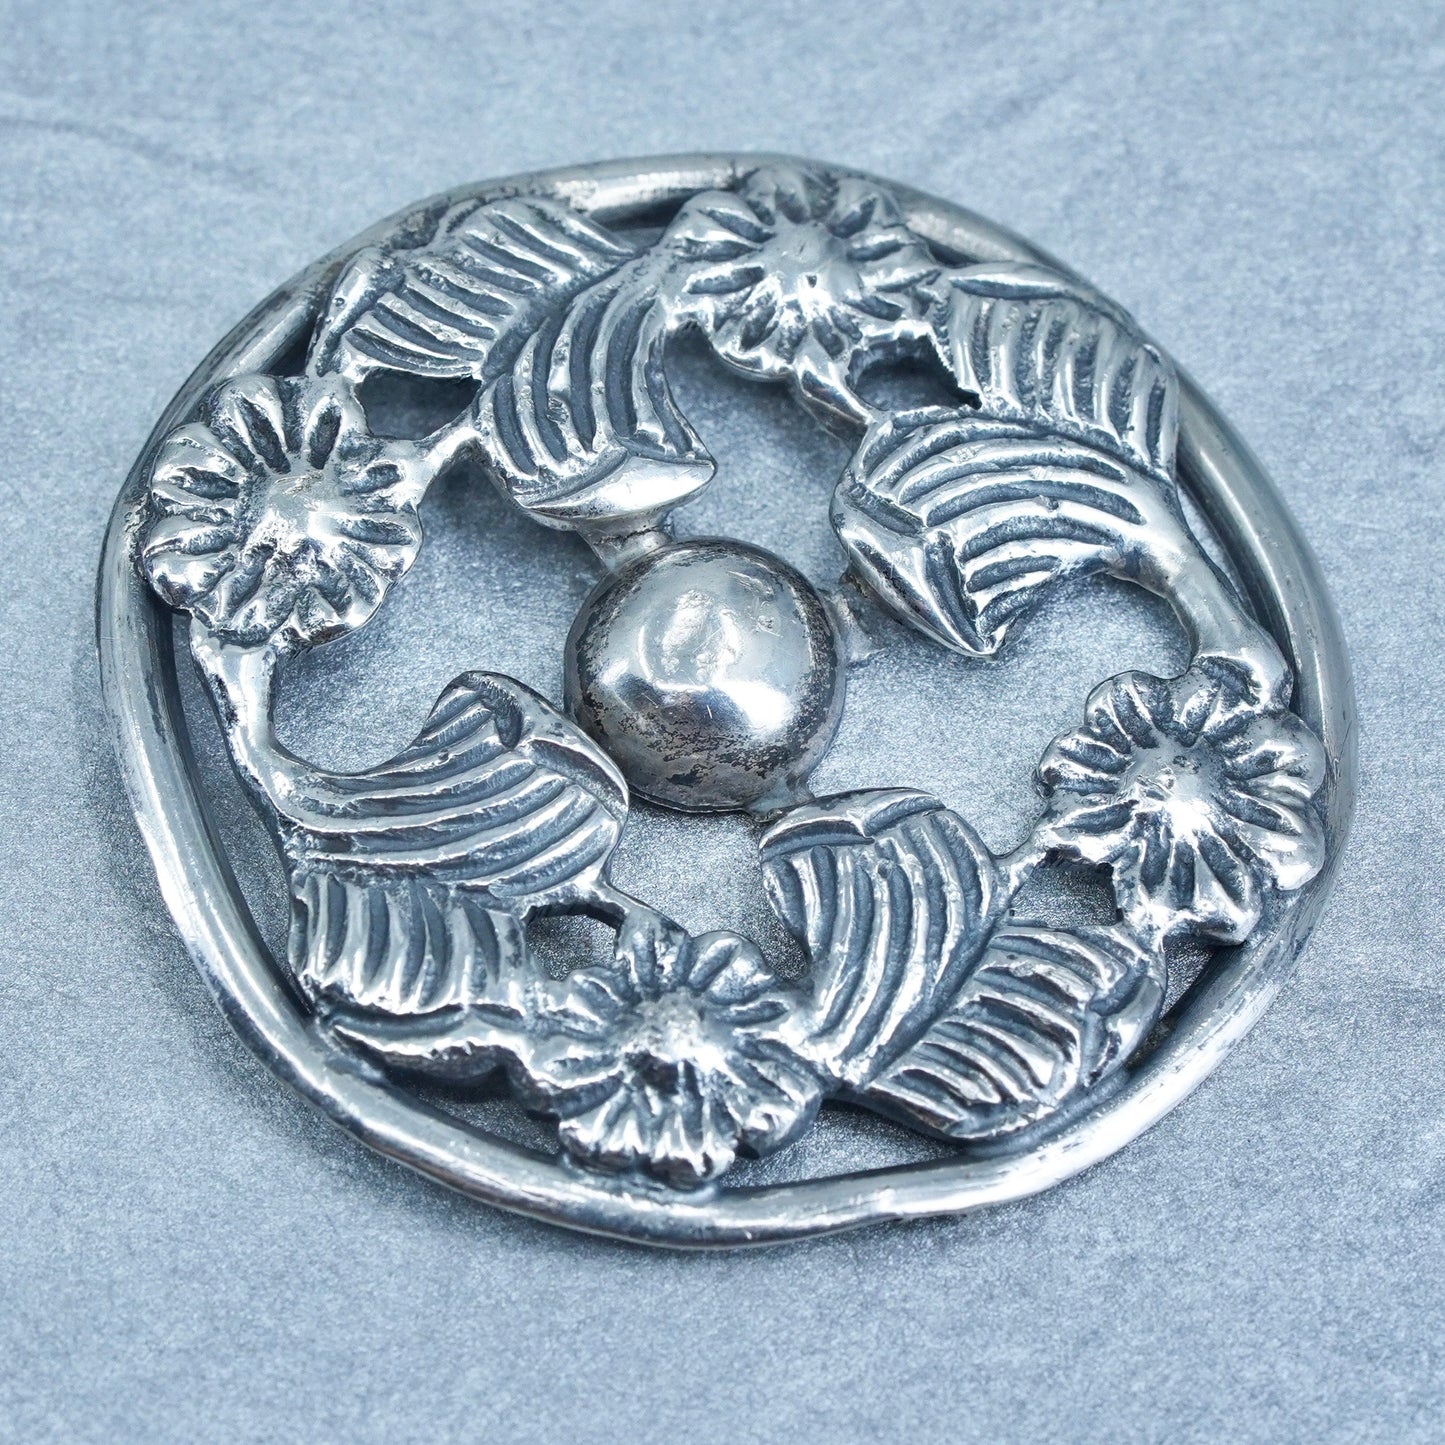 Antique silver tone handmade charm, 925 cross pendant